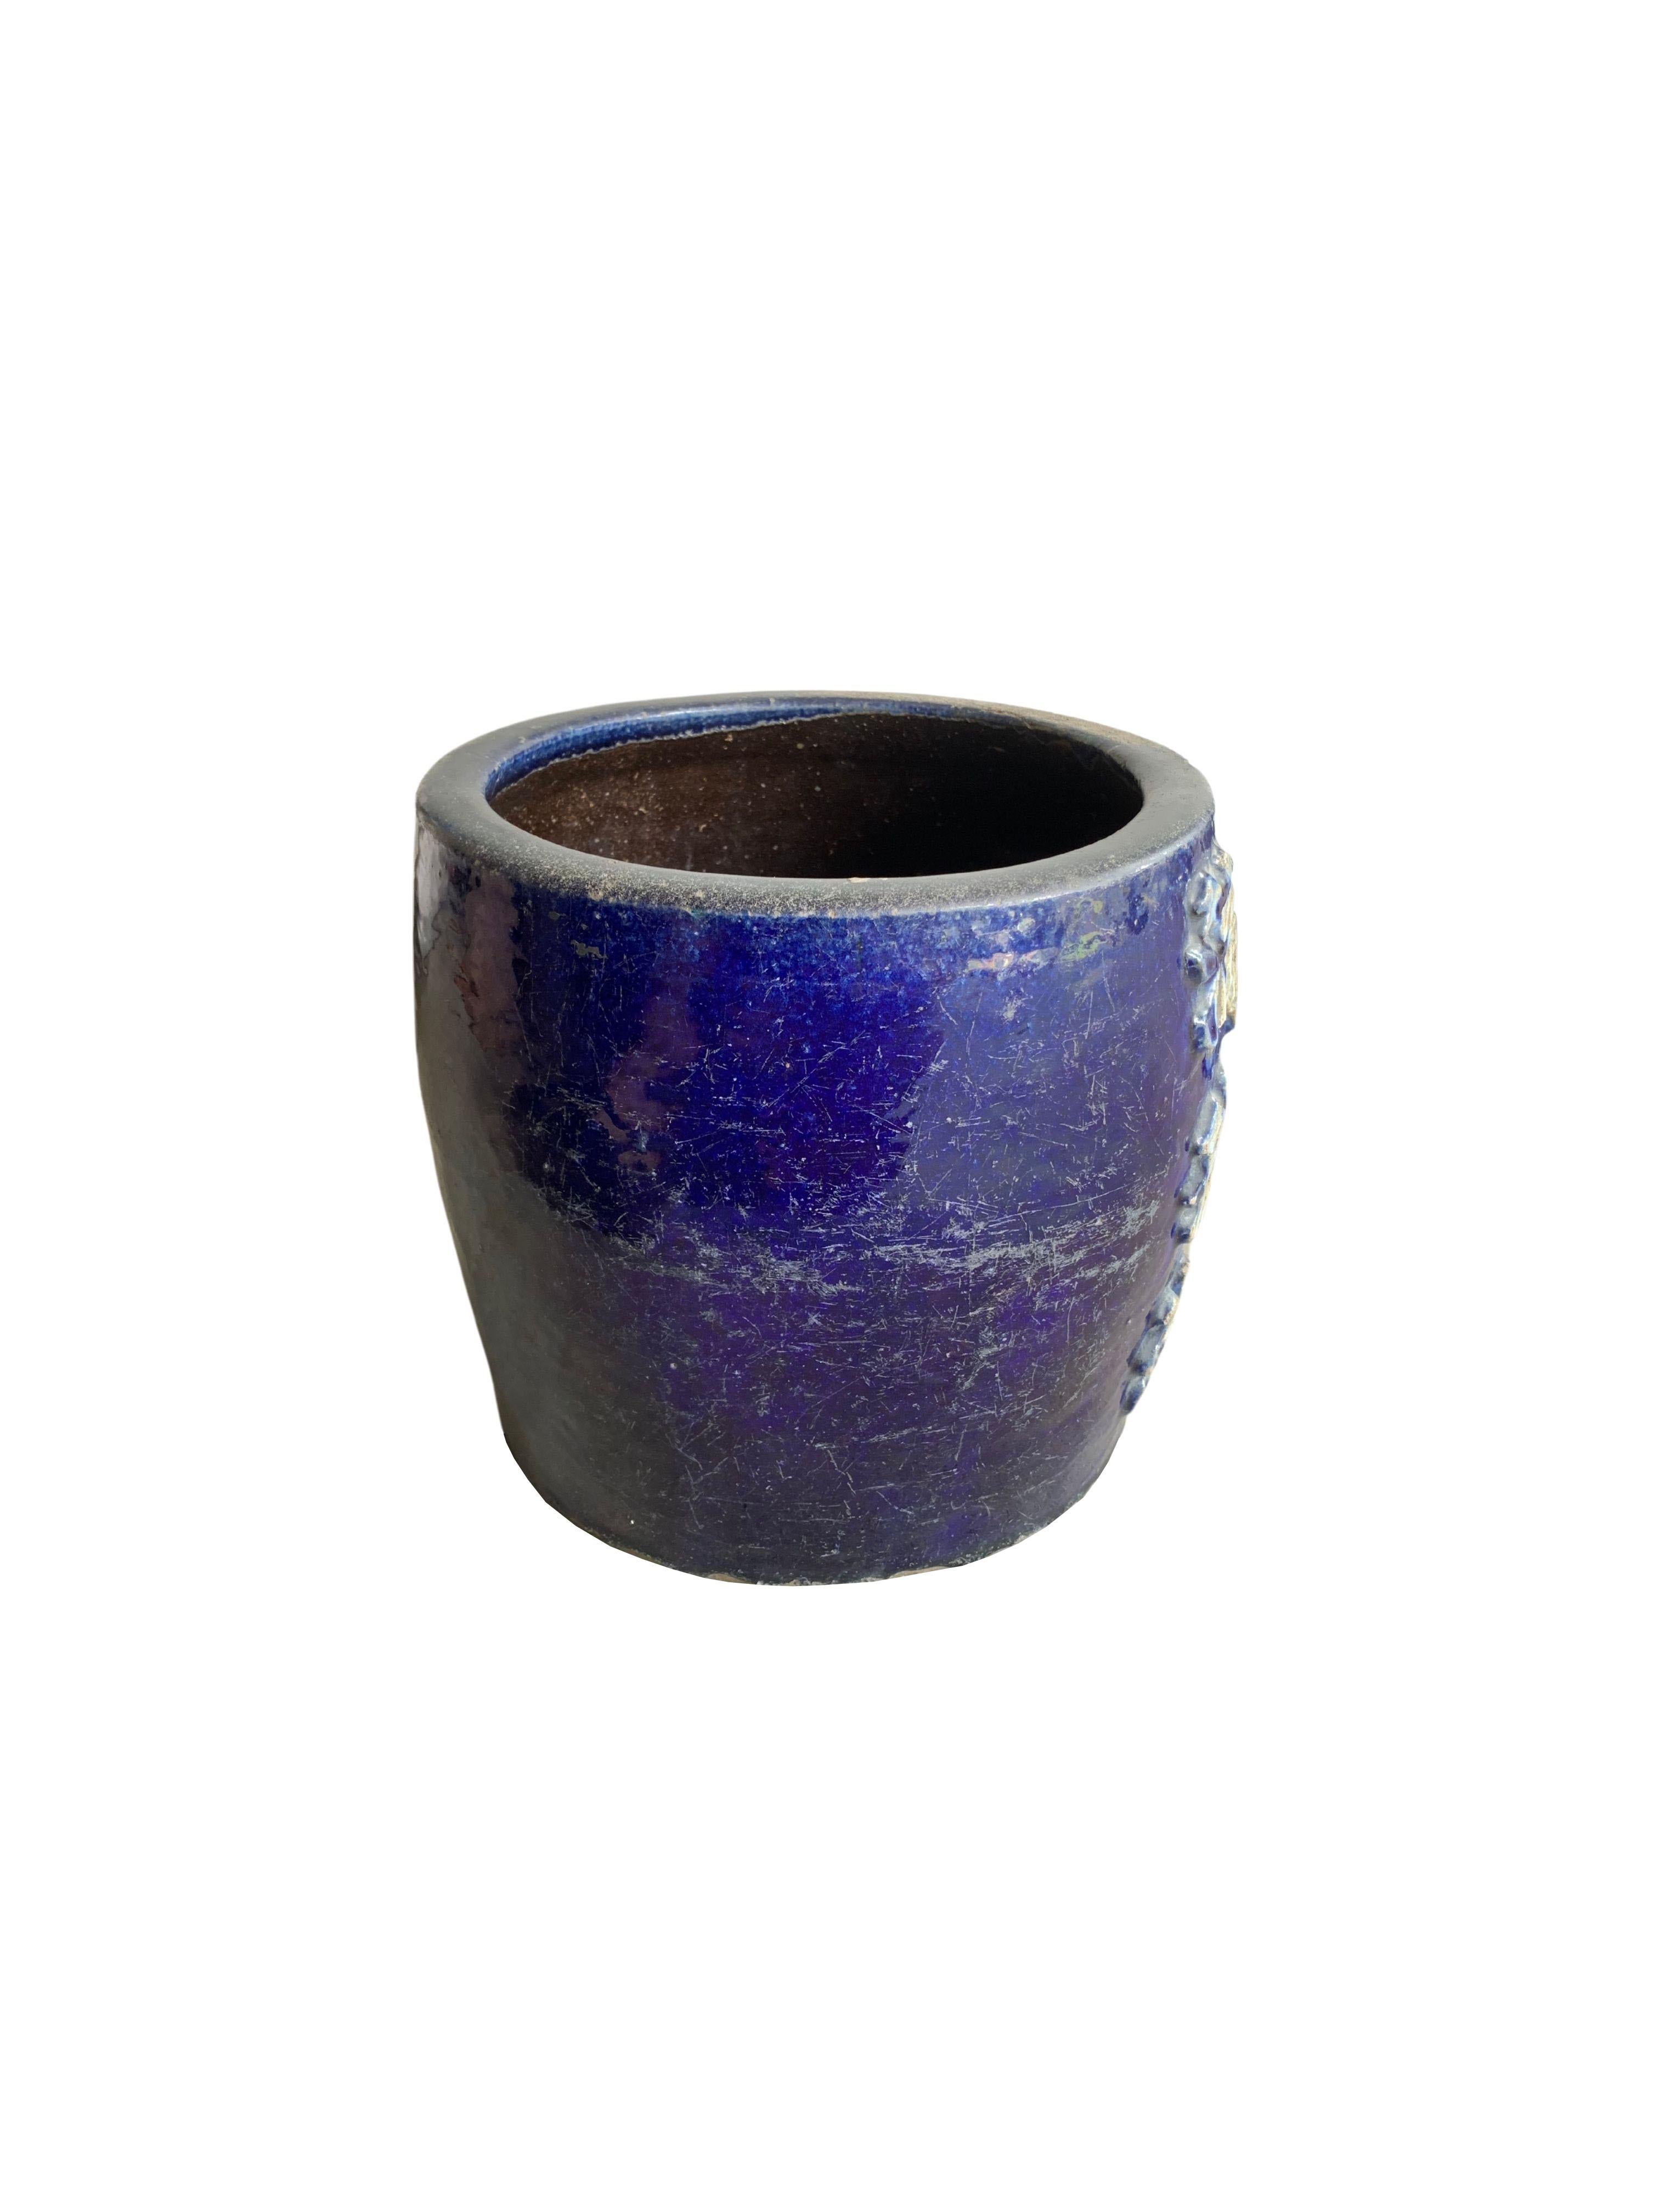 Qing Chinese Blue Glazed Ceramic Soy Sauce Jar / Planter, c. 1900